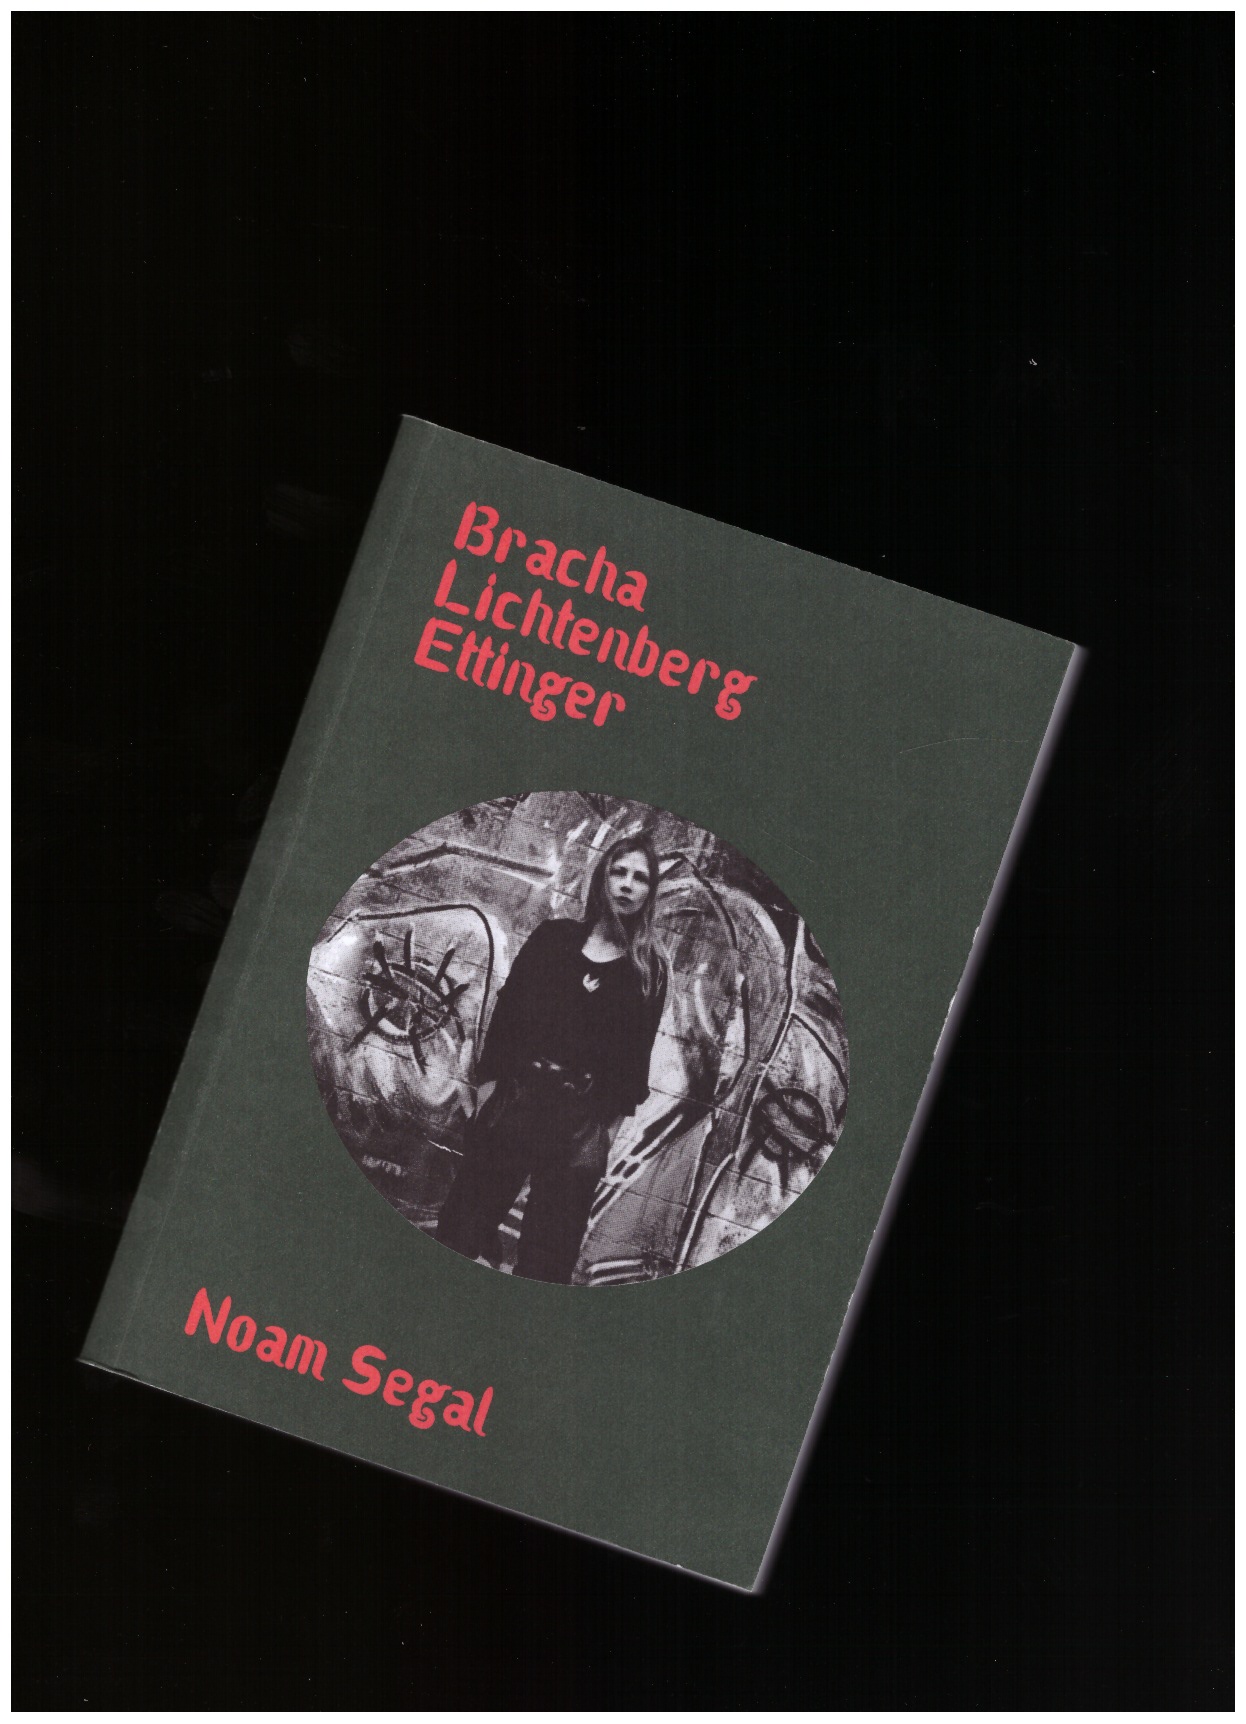 SEGAL, Noam (ed.) - Bracha Lichtenberg Ettinger